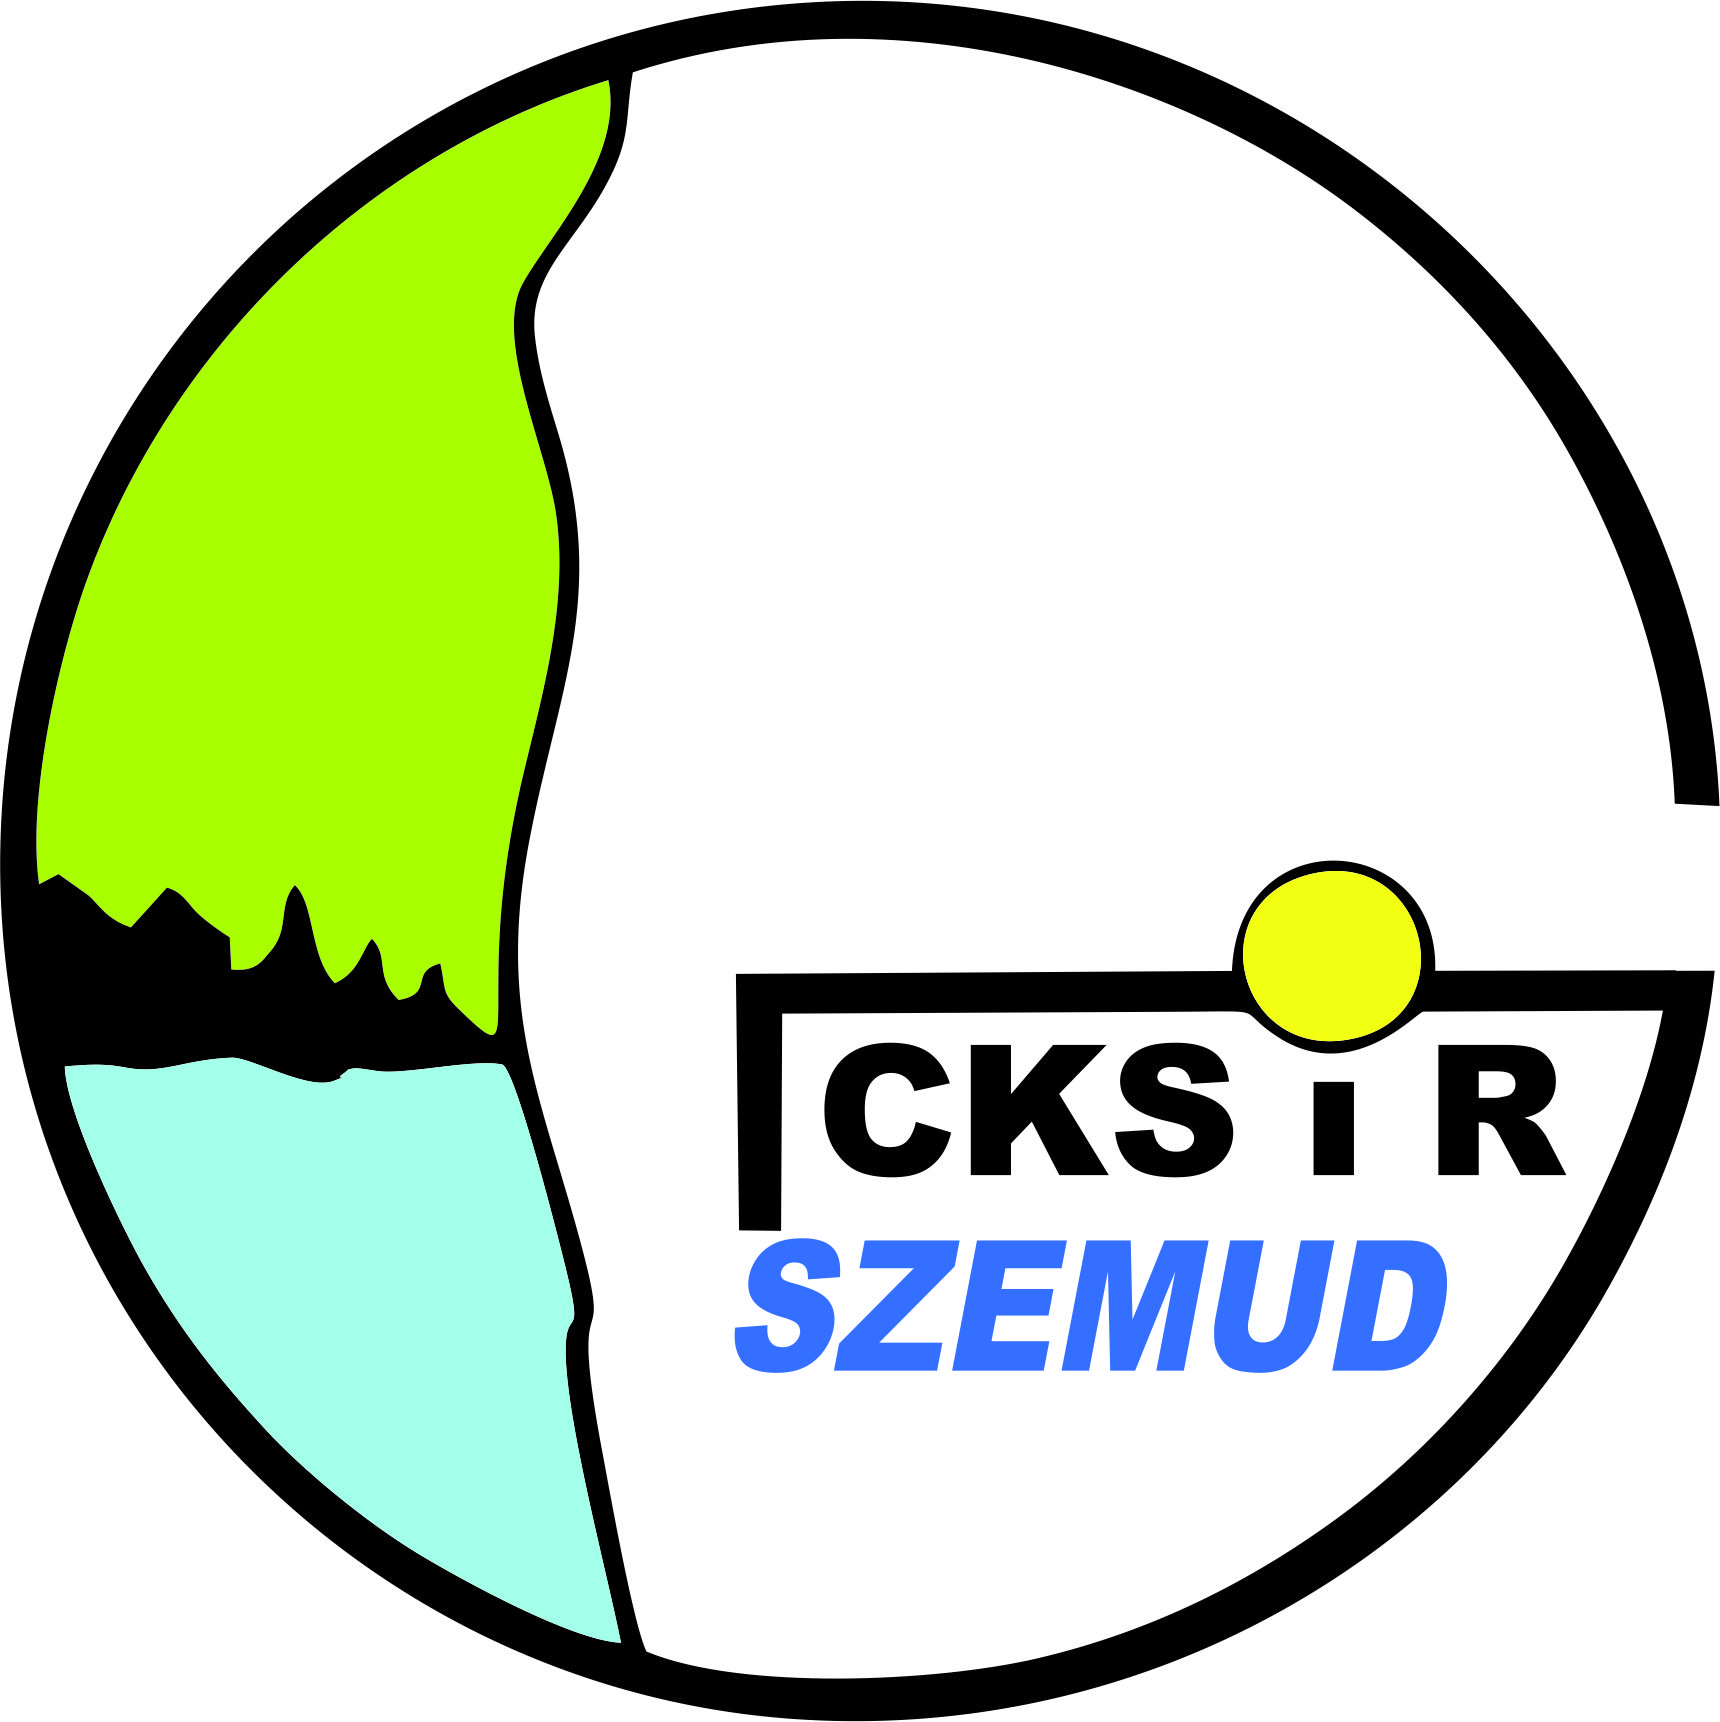 gcksir-logo